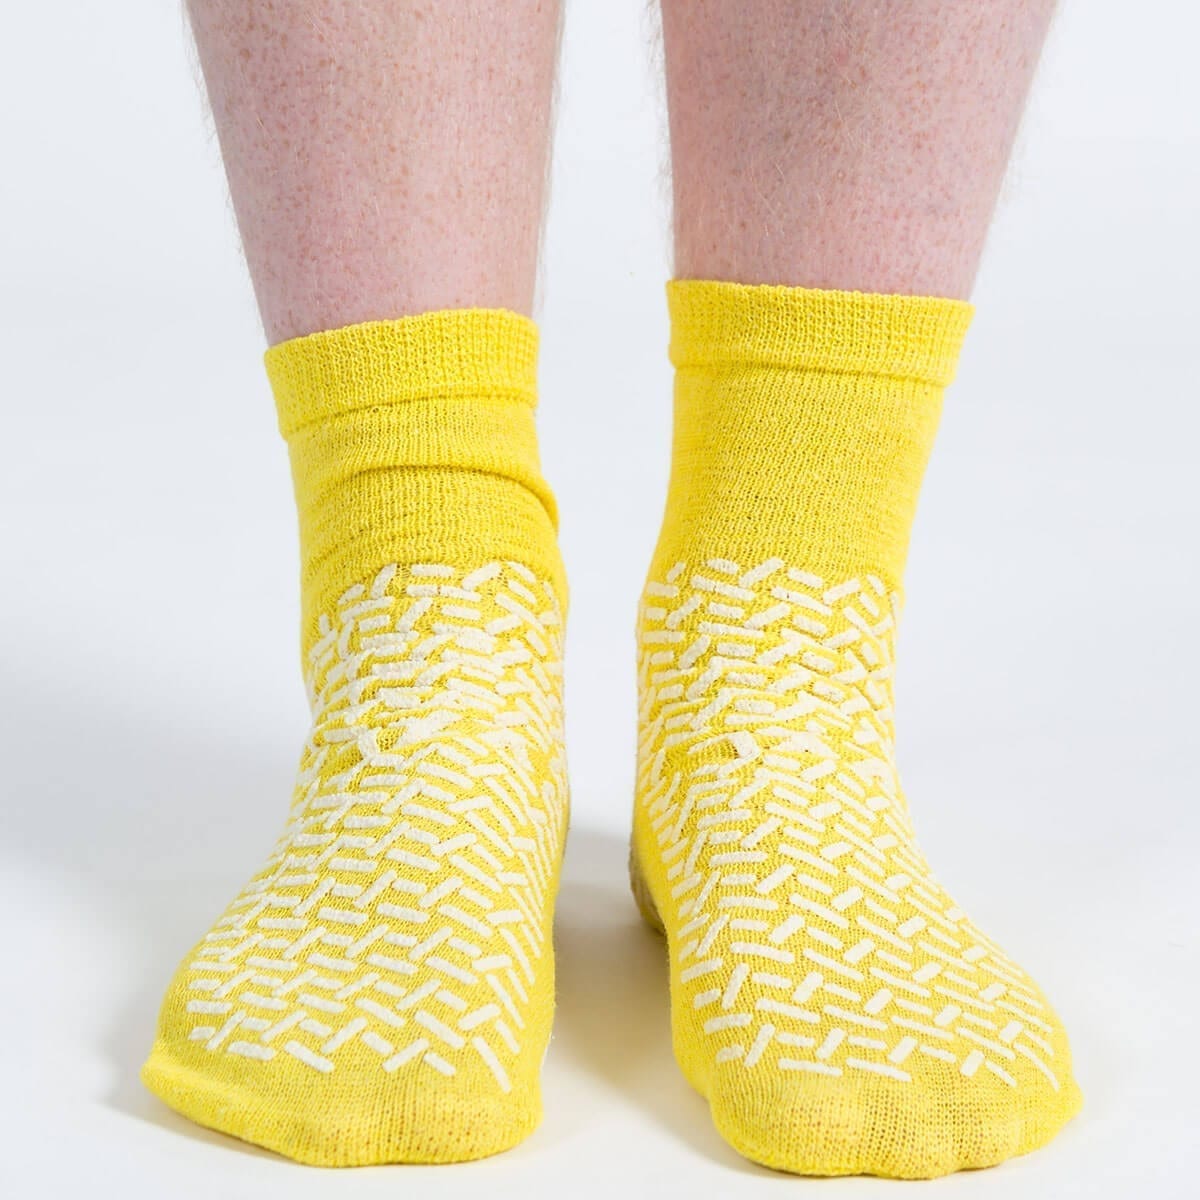 XL Non Slip Socks For The Elderly & Patients